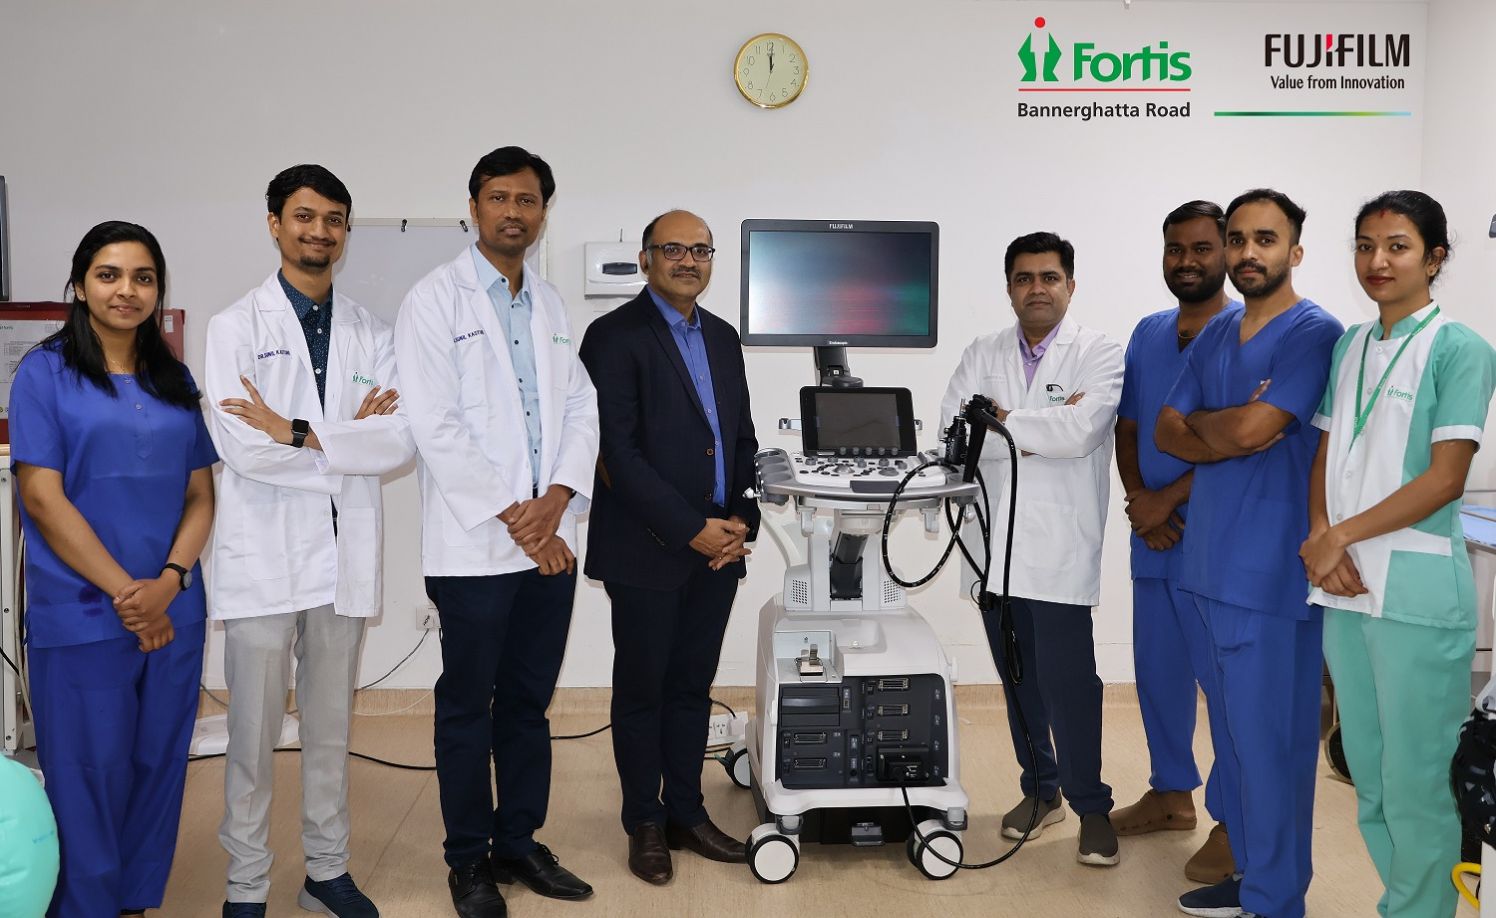 FUJIFILM India Launches most advanced Endoscopic Ultrasound Machine ALOKA ARIETTA 850 with the First-ever Installation in Fortis Hospital Bengaluru, Karnataka in India